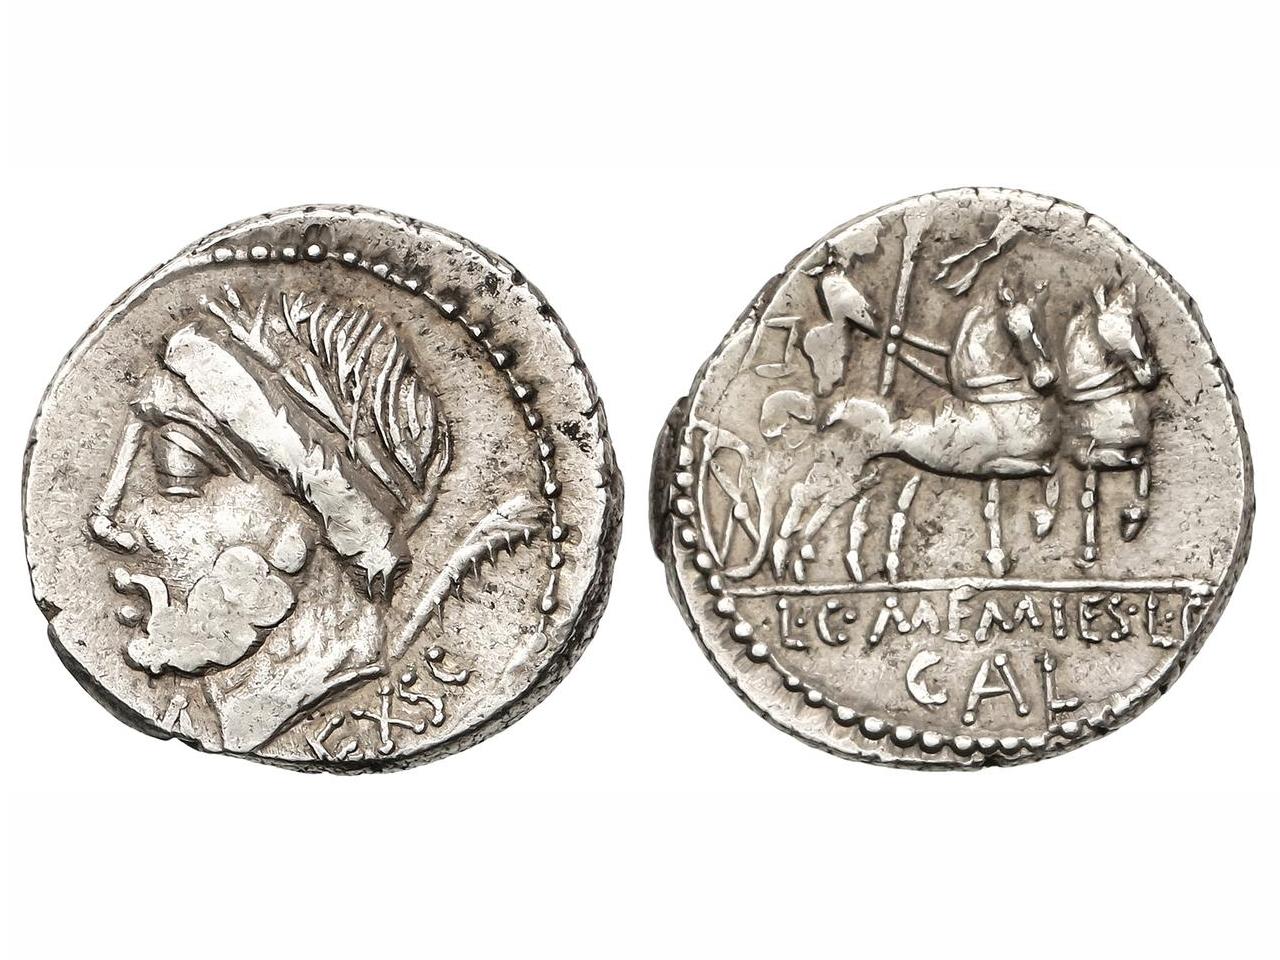 REPÚBLICA ROMANA. Denario. 87 a.C. MEMMIA-8. L. y C. Memmius